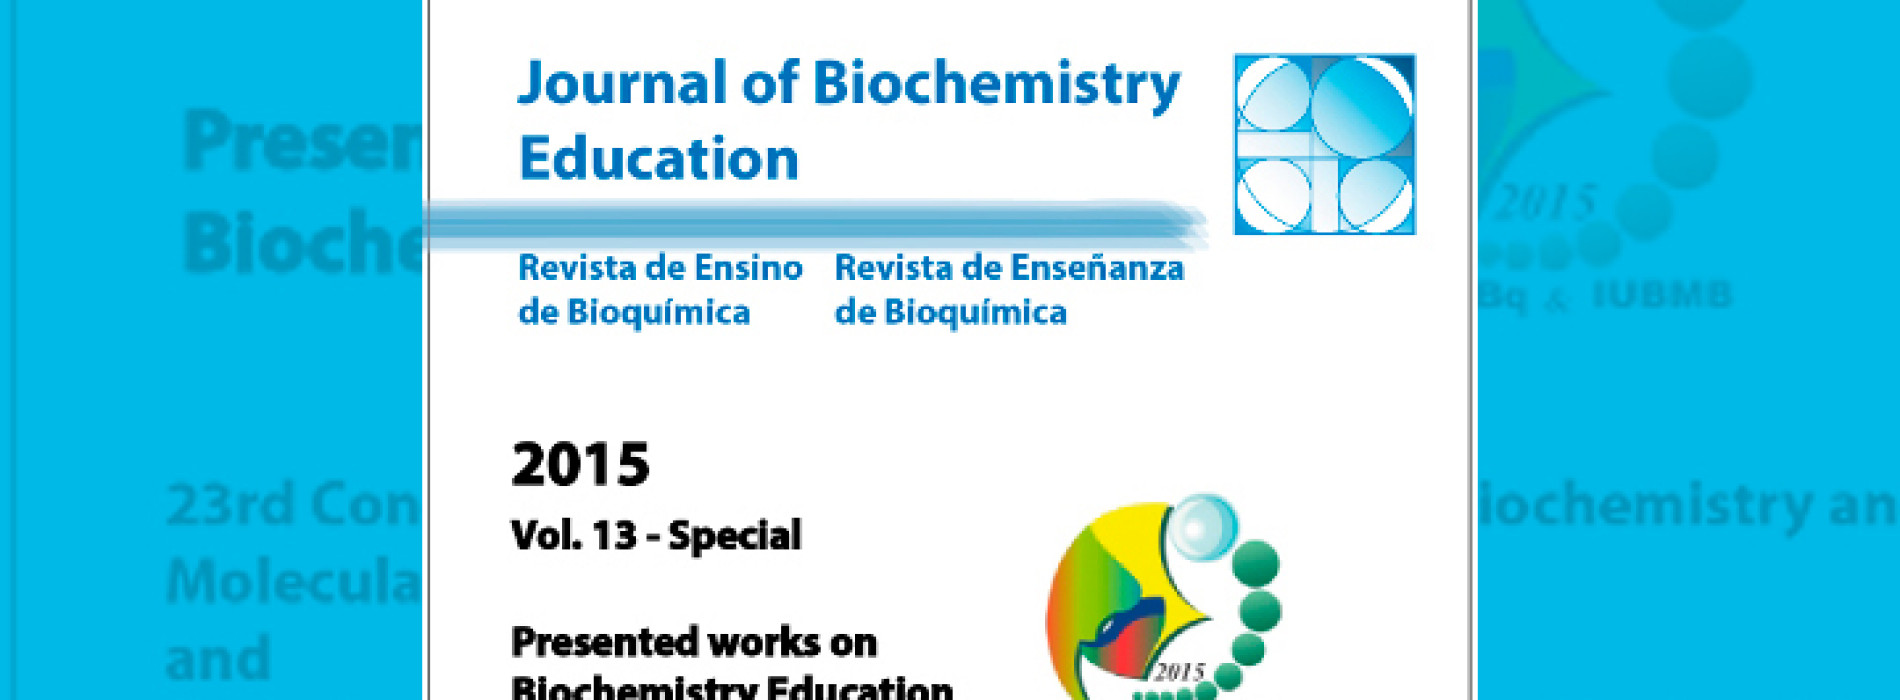 Revista de Ensino de Bioquímica